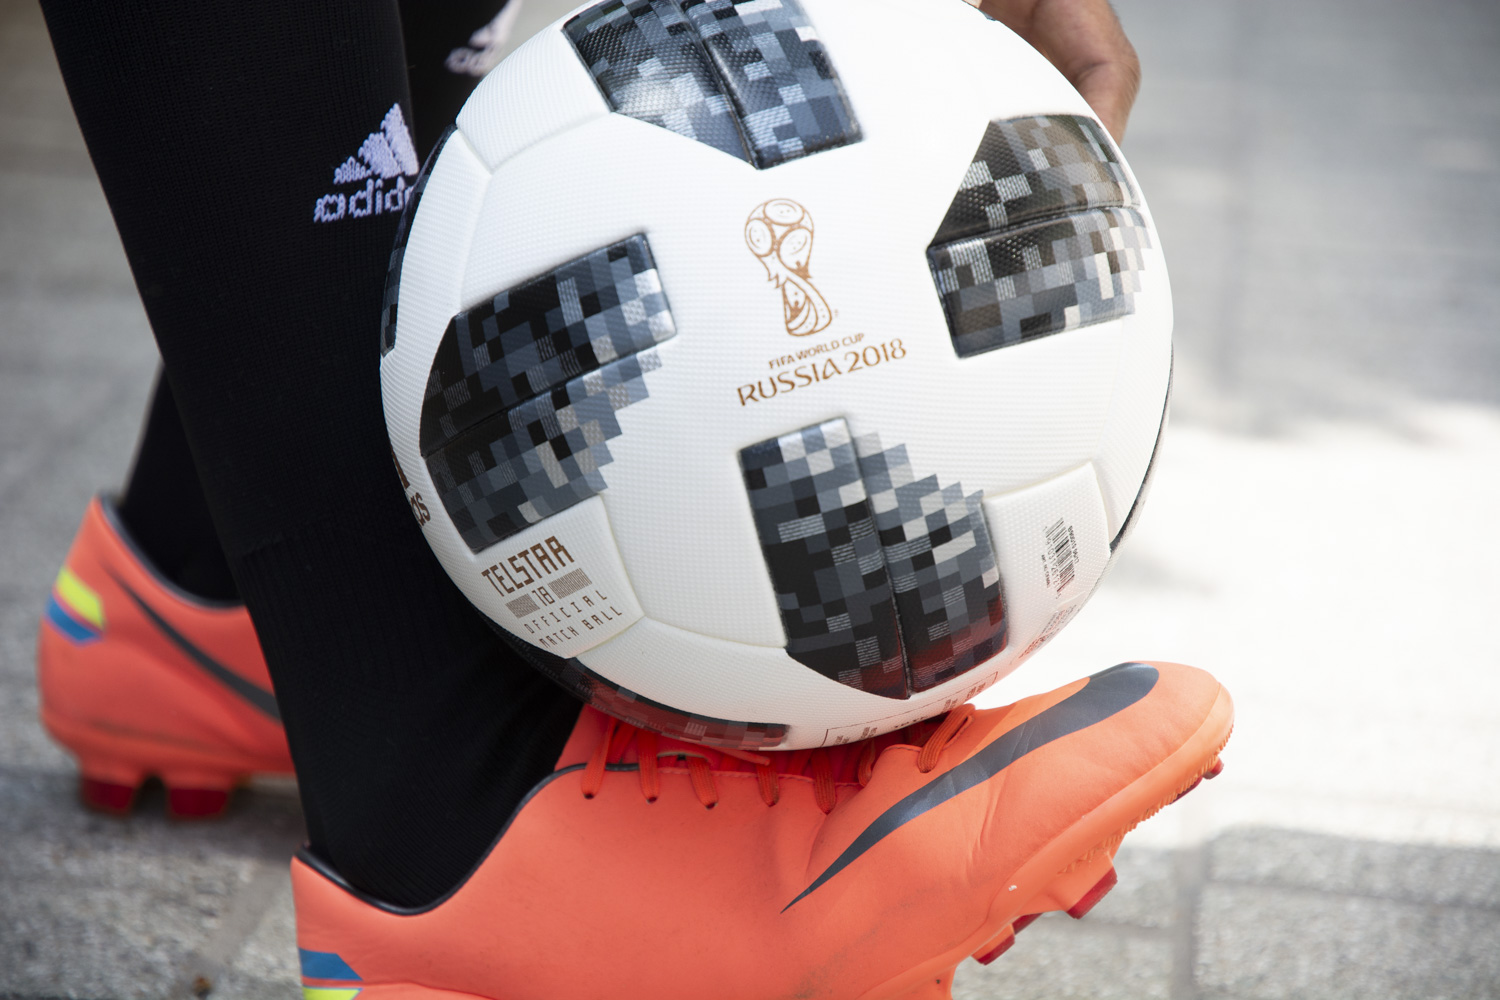 2018 FIFA World Cup Soccer Ball